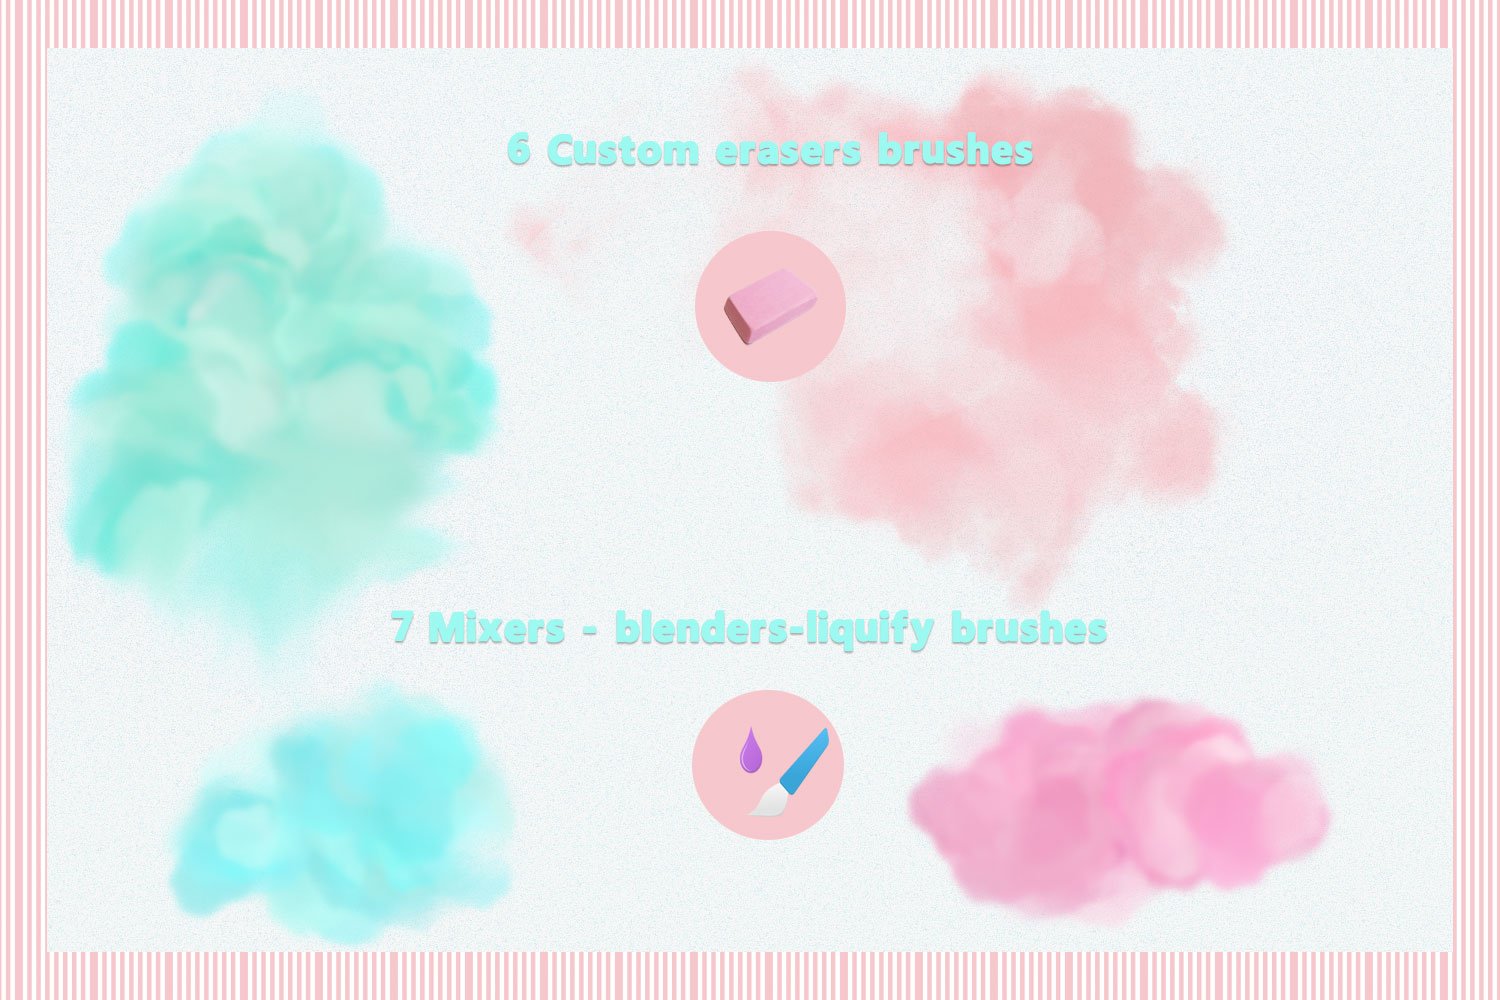 custom erasers and blenders 974